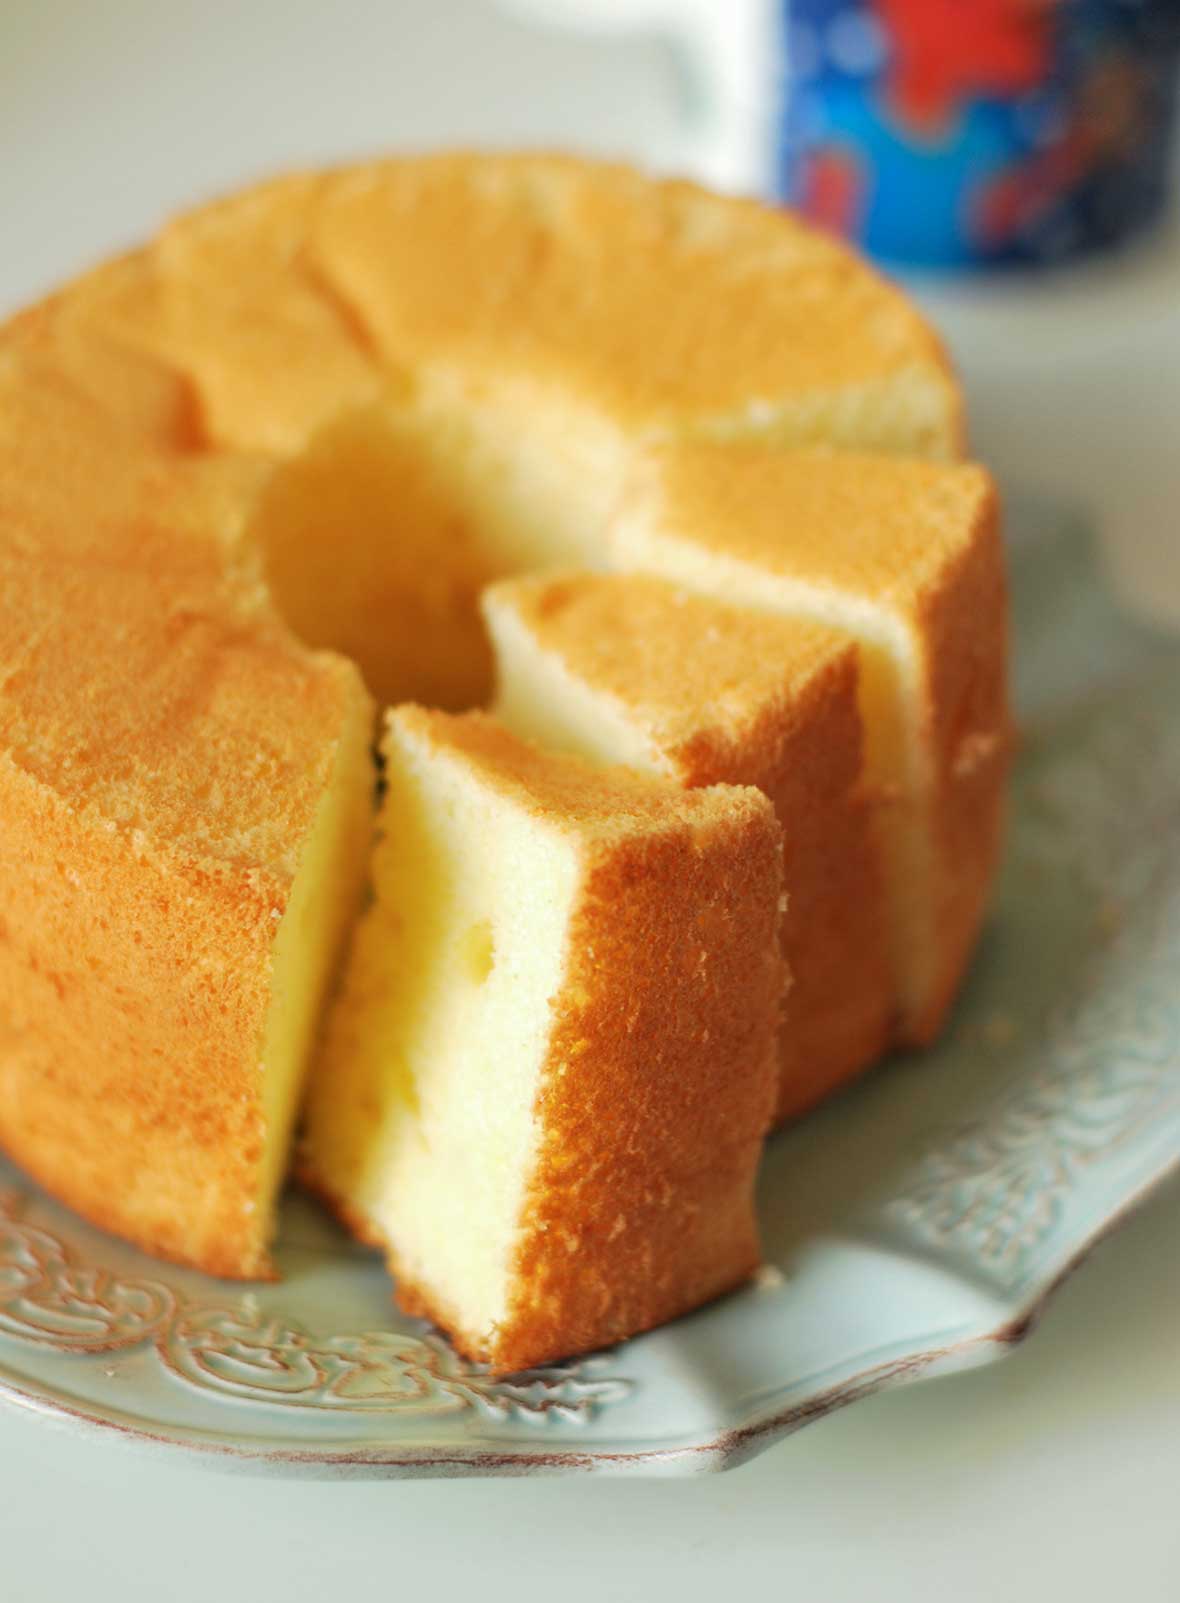 Chiffon cake with lemon icing